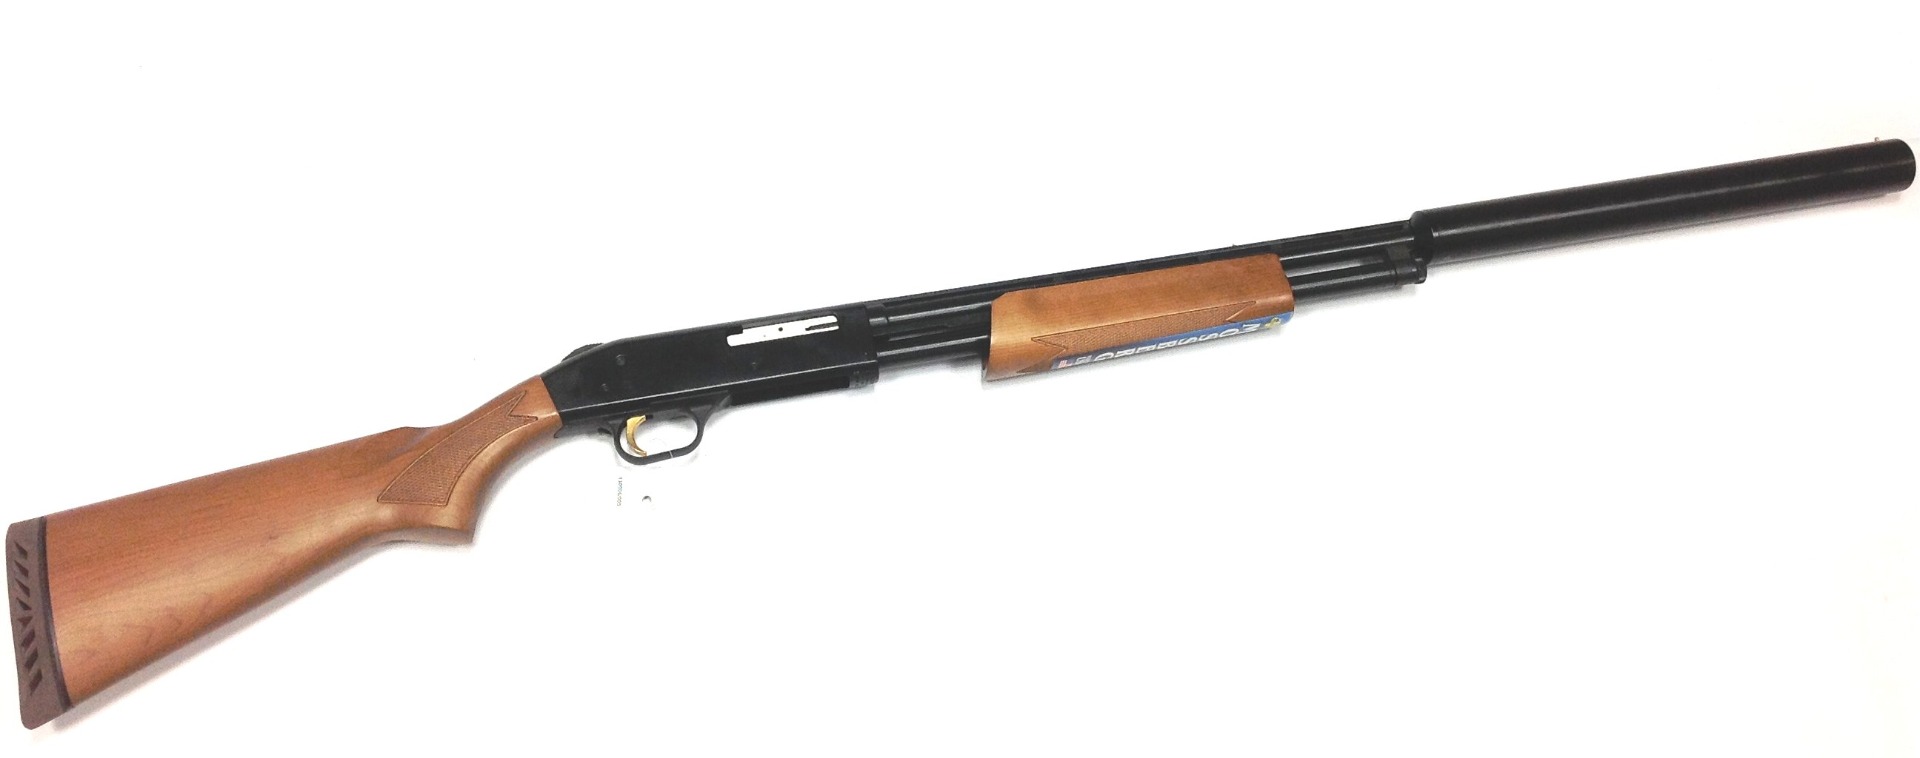 Mossberg .410 Hushpower Moderated Shotgun